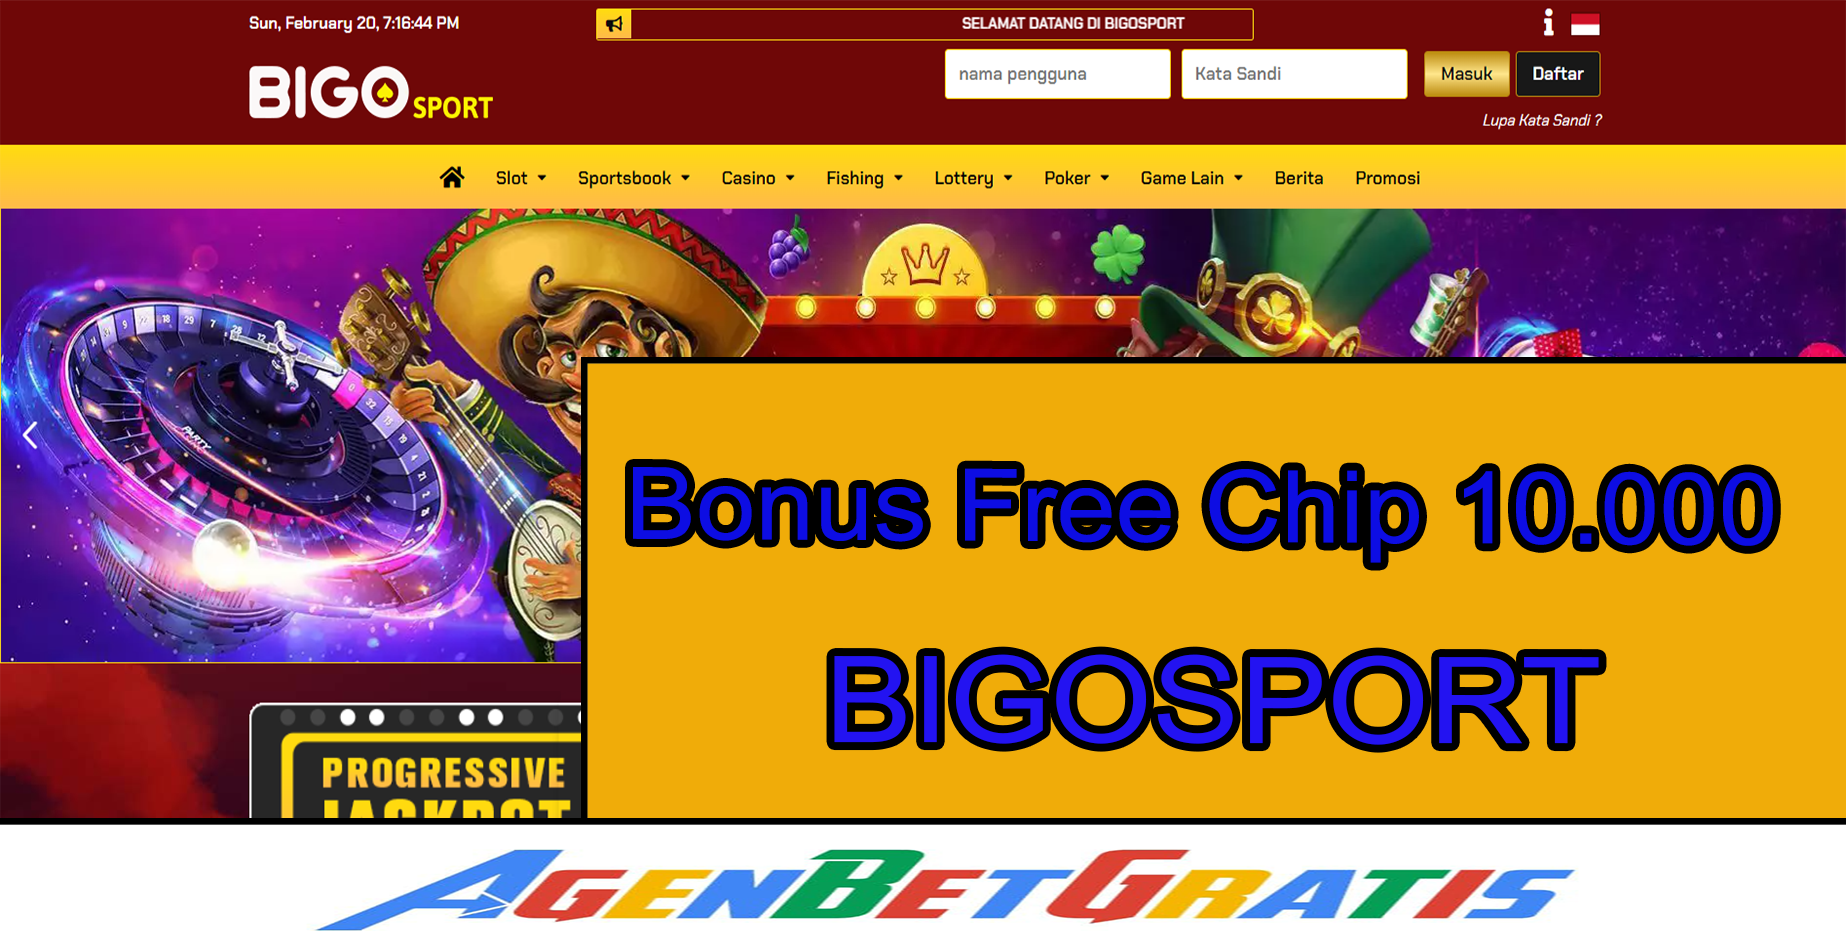 BIGOSPORT - Bonus FreeChip 10.000